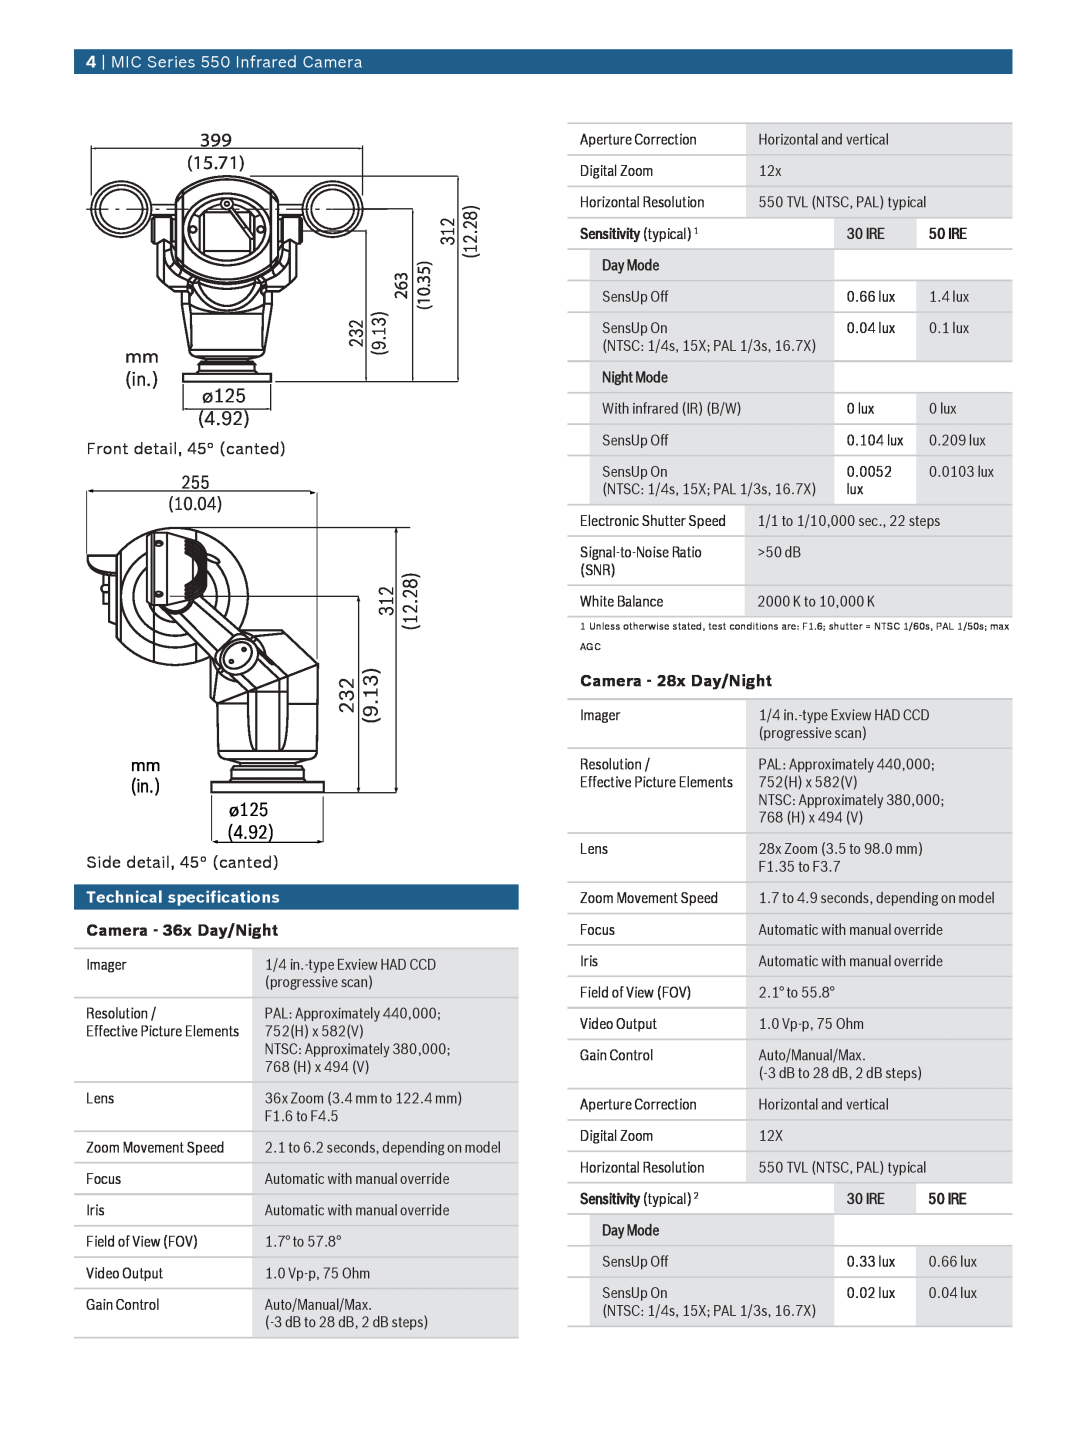 Bosch Appliances manual 399 15.71, Ø125 4.92, 12.28, 263 9.13, 312 10.35, 10.04, MIC Series 550 Infrared Camera 